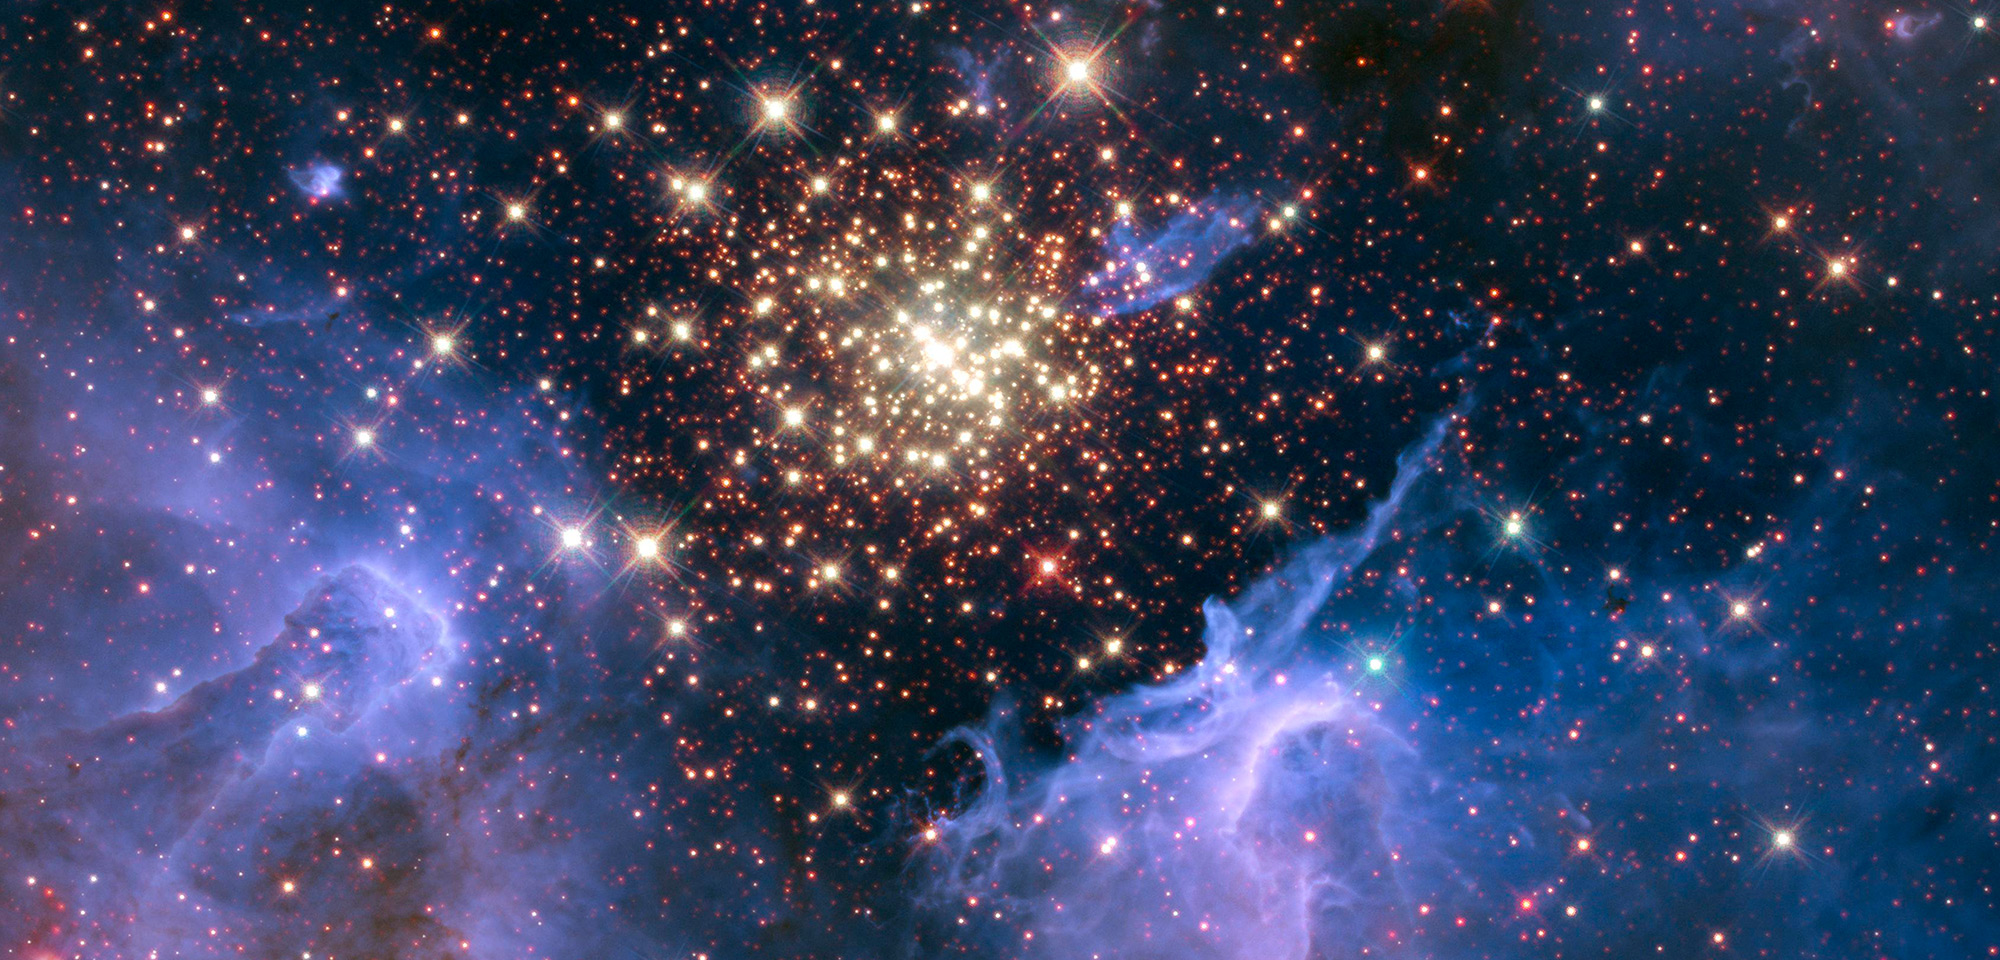 From https://www.nasa.gov/image-feature/burst-of-celestial-fireworks